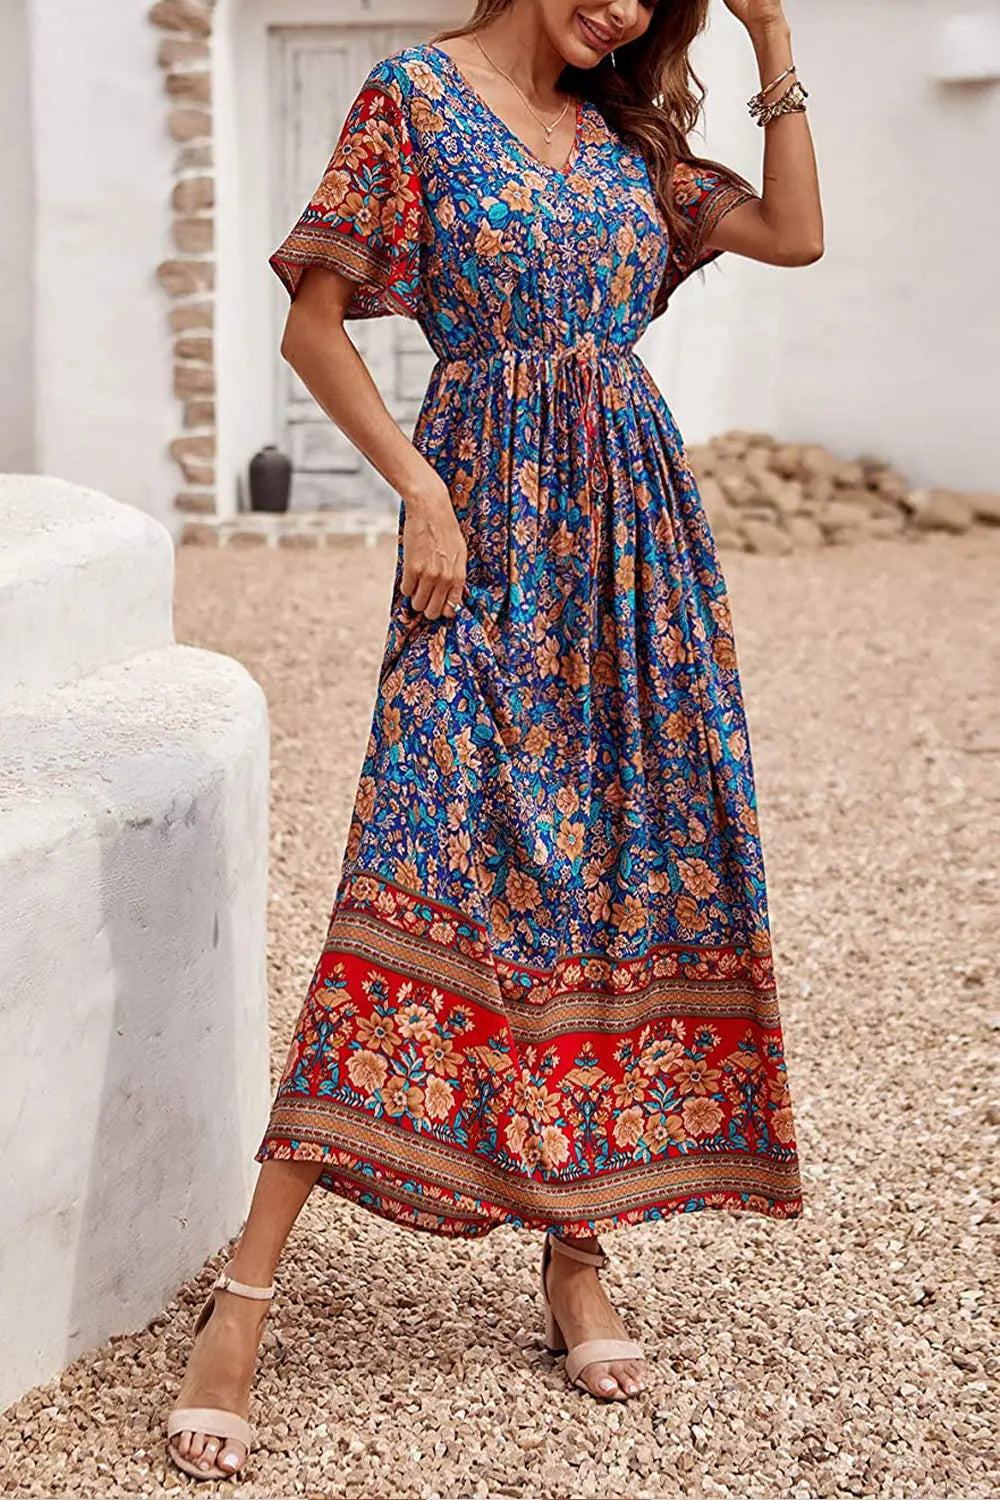 Large, Blue Floral) - PRETTYGARDEN Women's Casual Floral Print V Neck Short  Sleeve Summer Boho Beach Dress High Waist Long Maxi Dresses